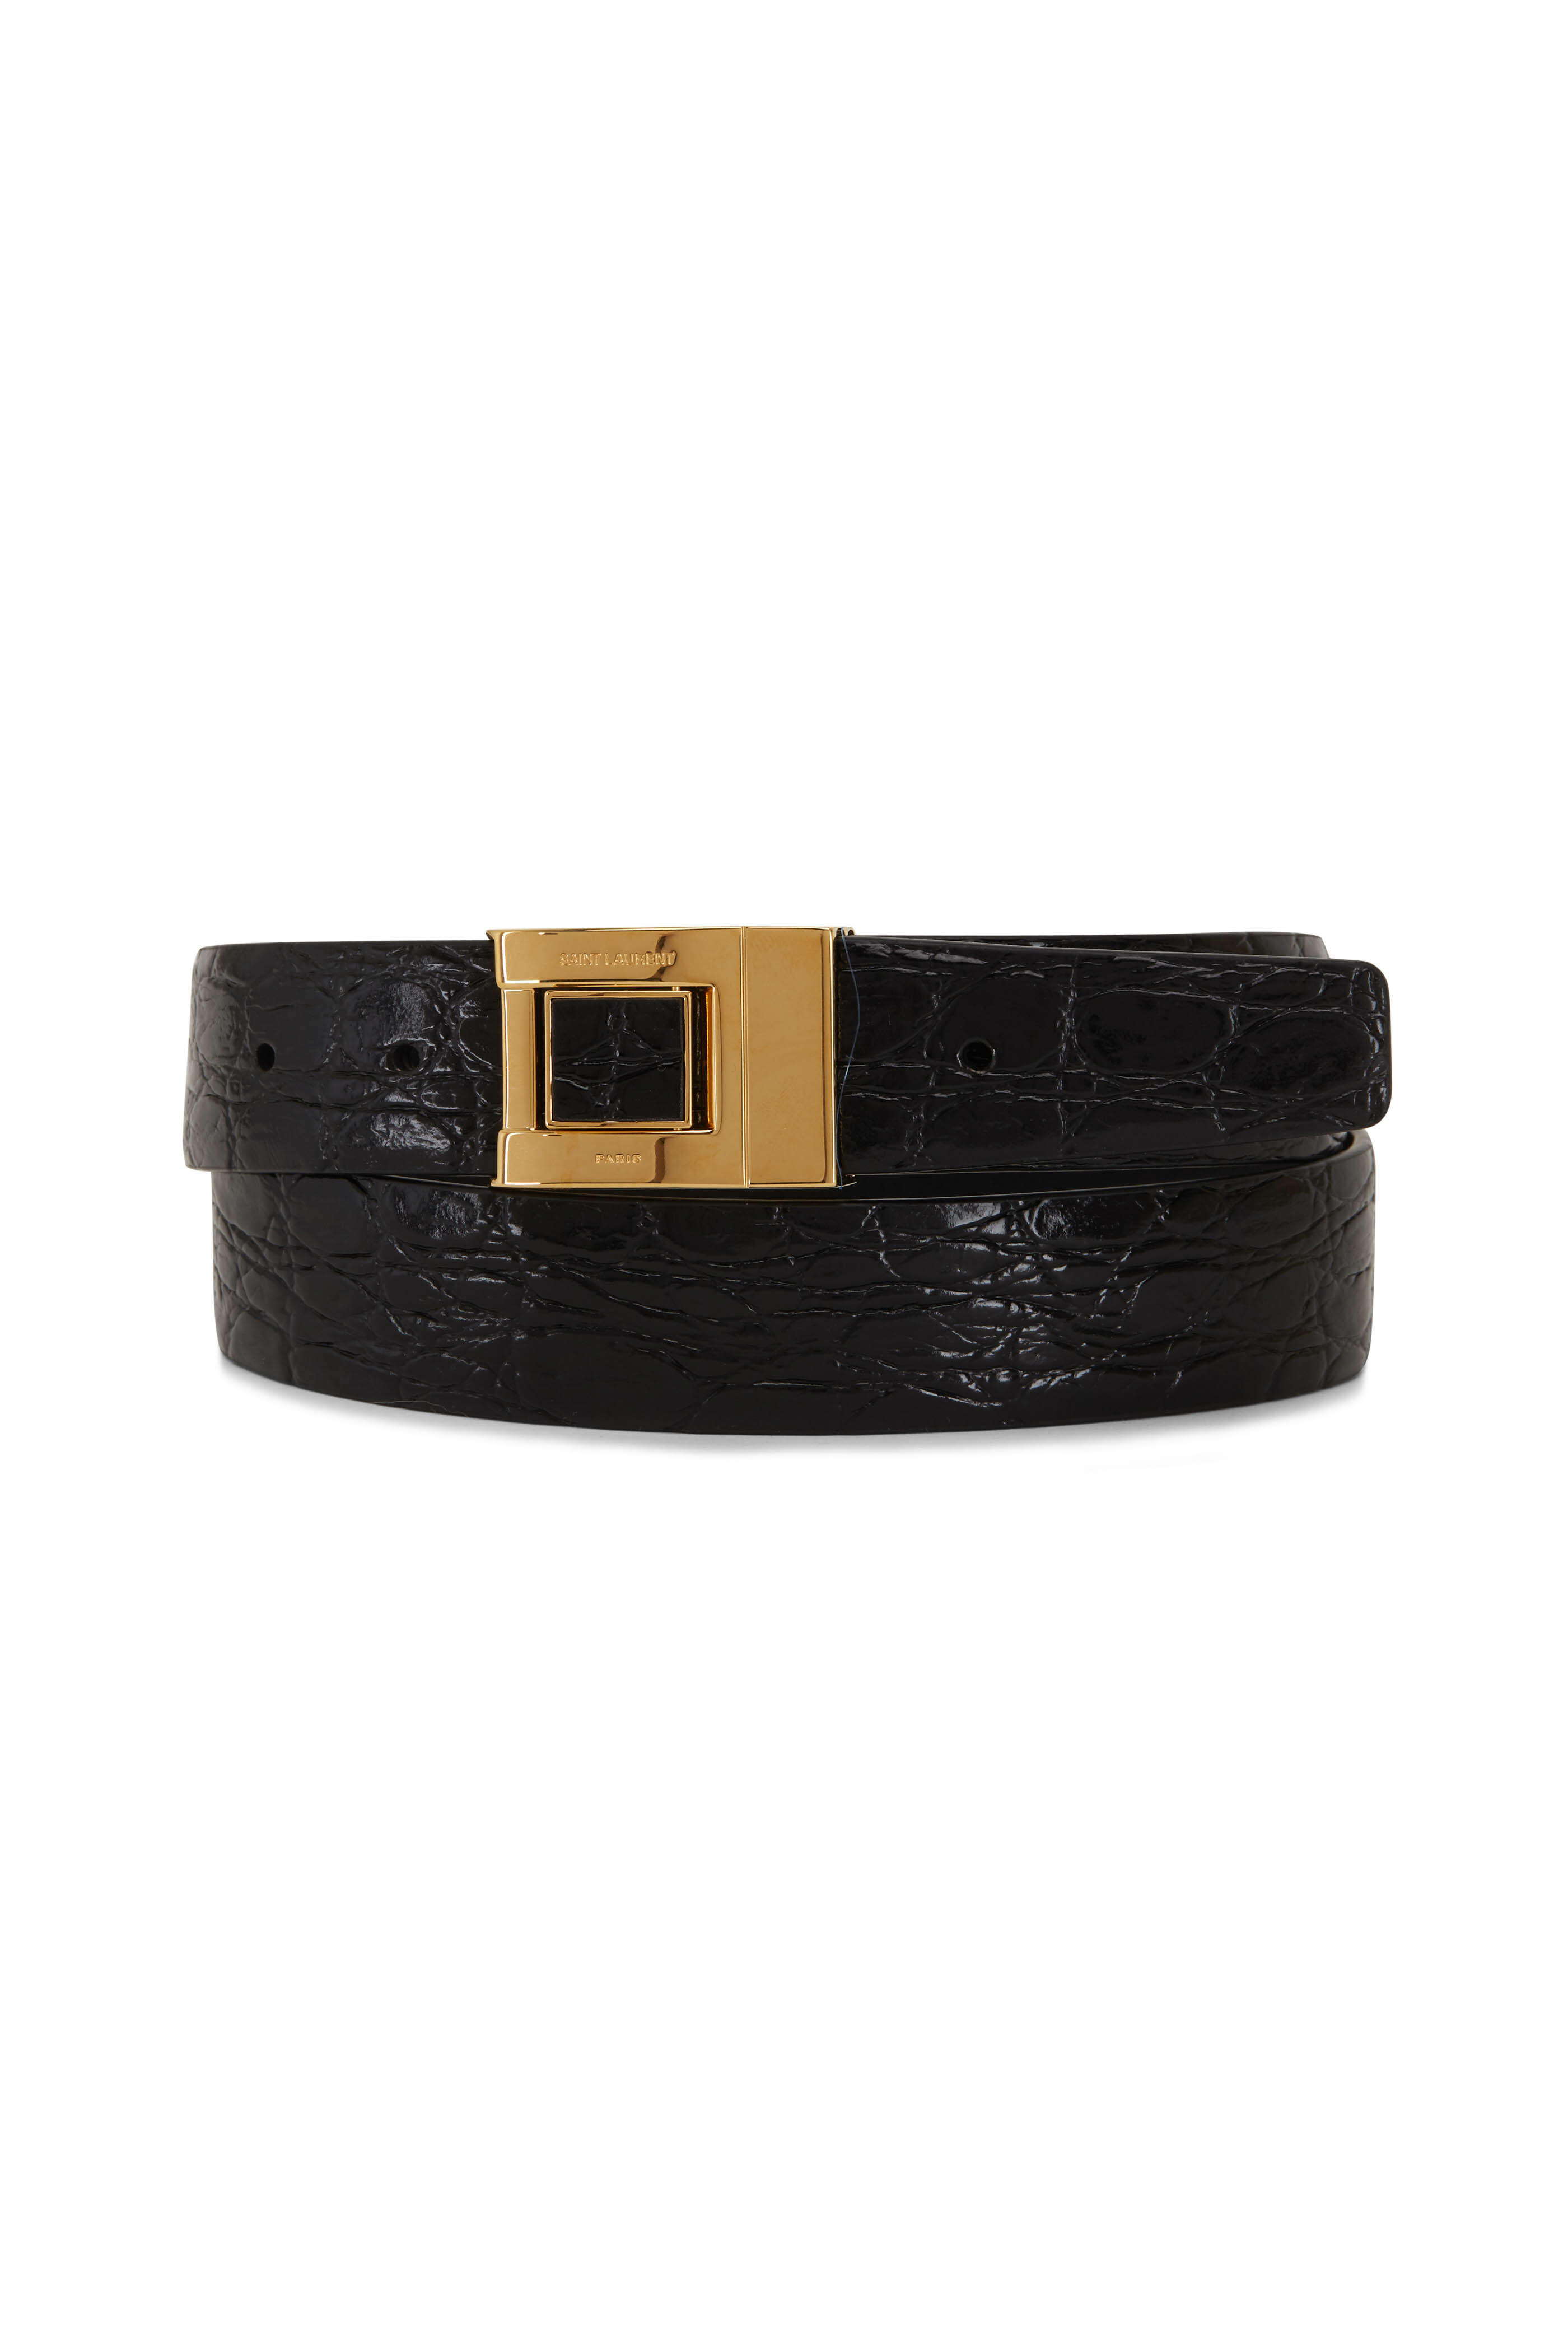 Square Up Gold and Black Crocodile-Embossed Belt